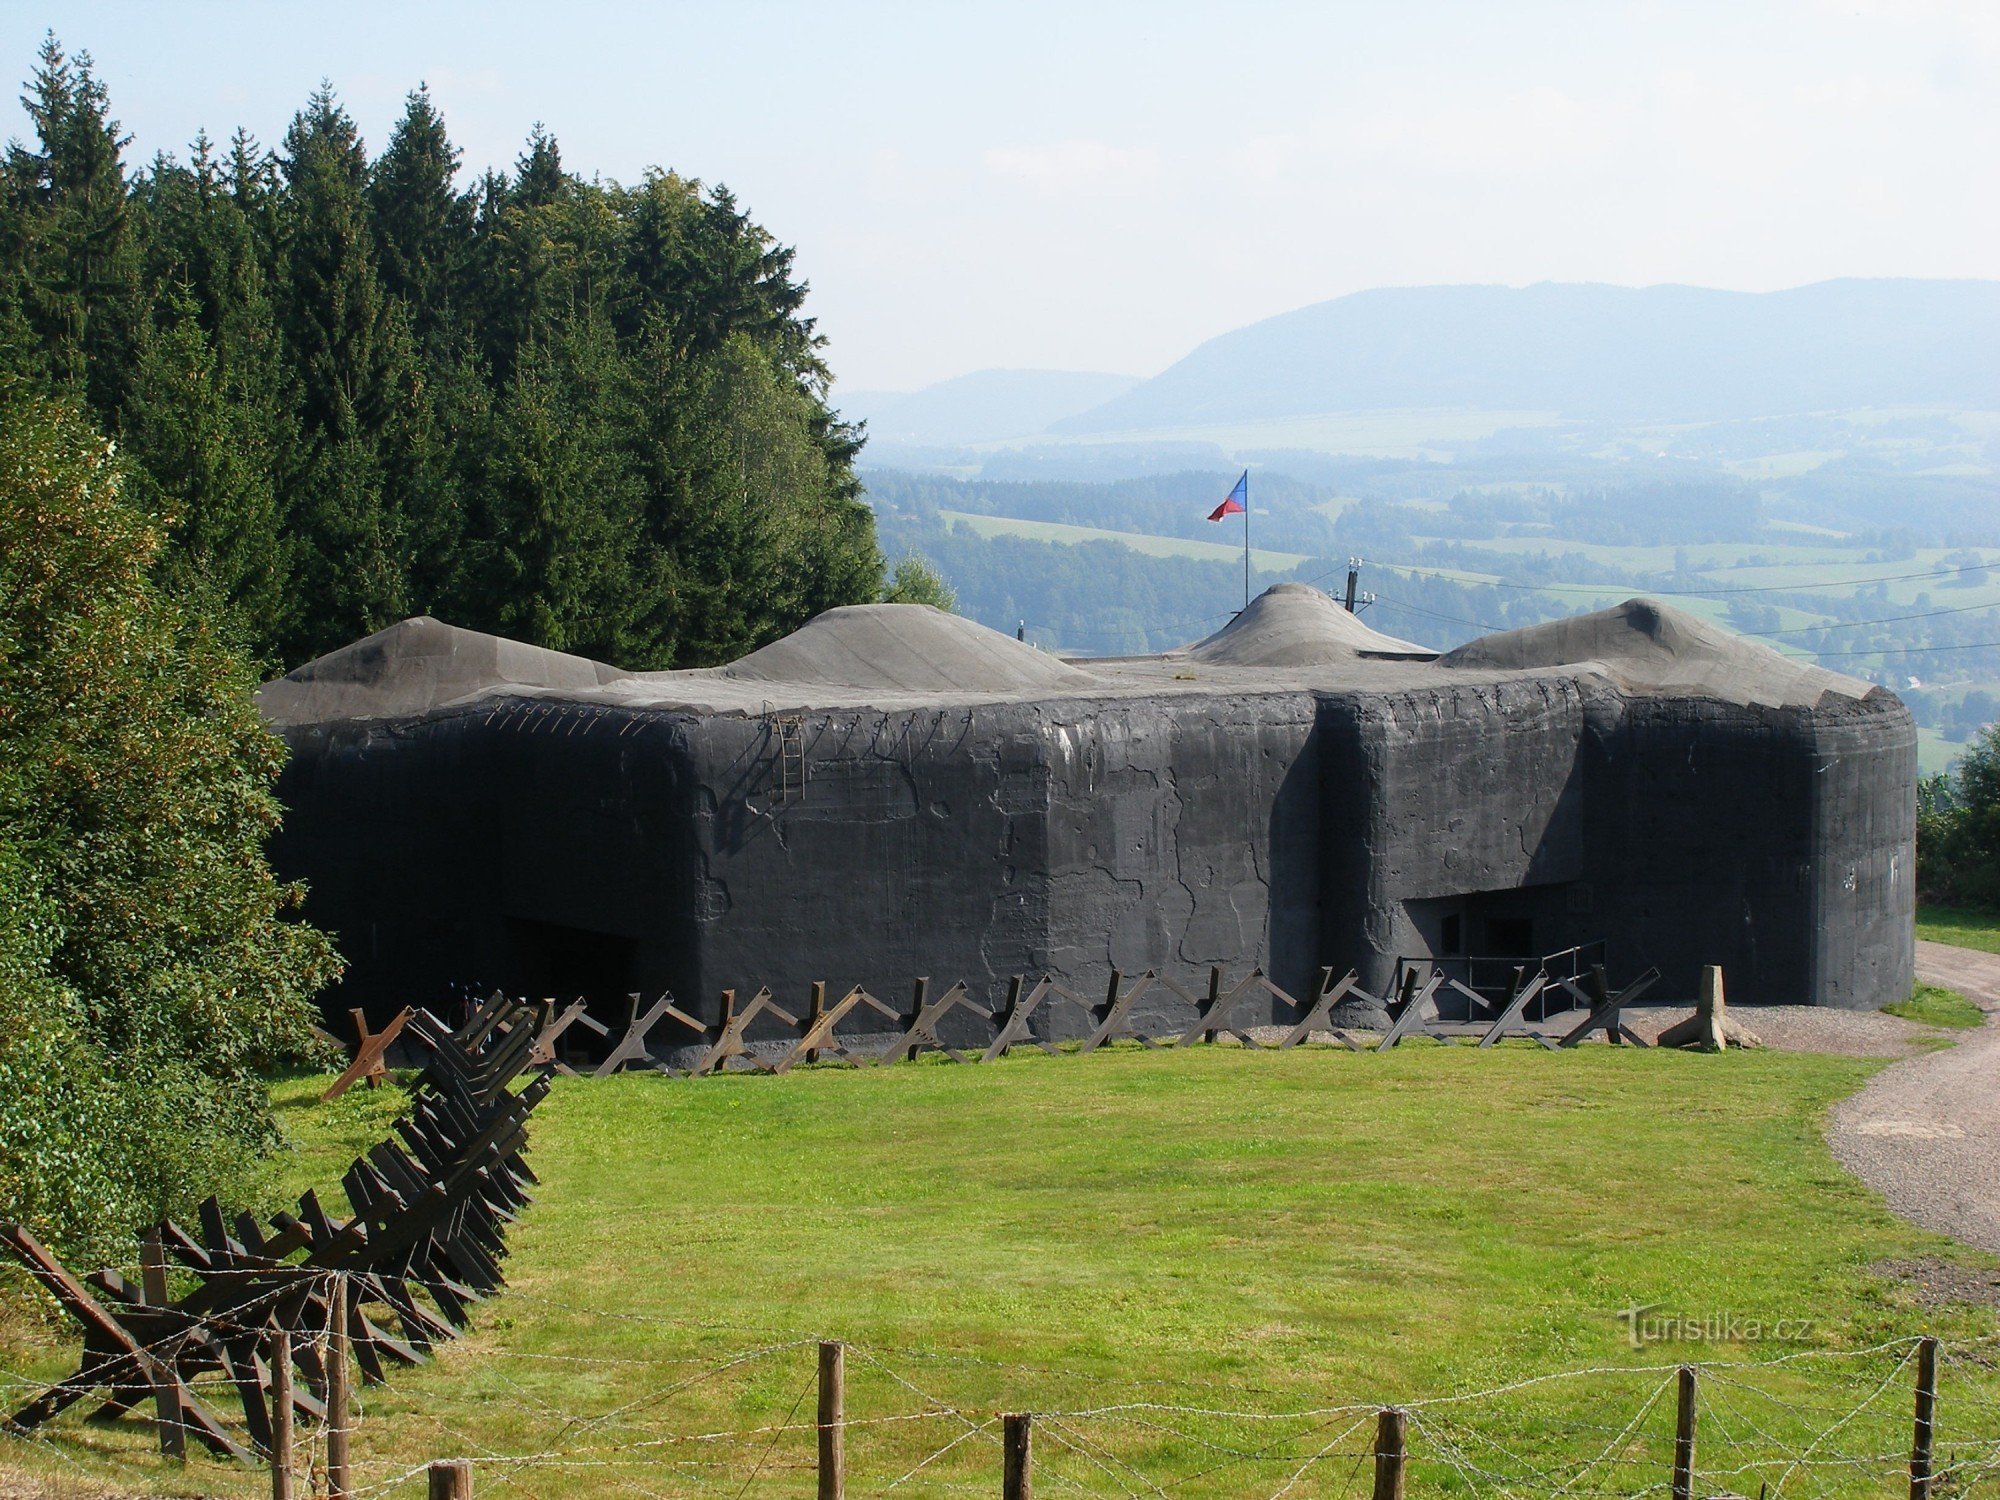 Stachelberg artillery fortress